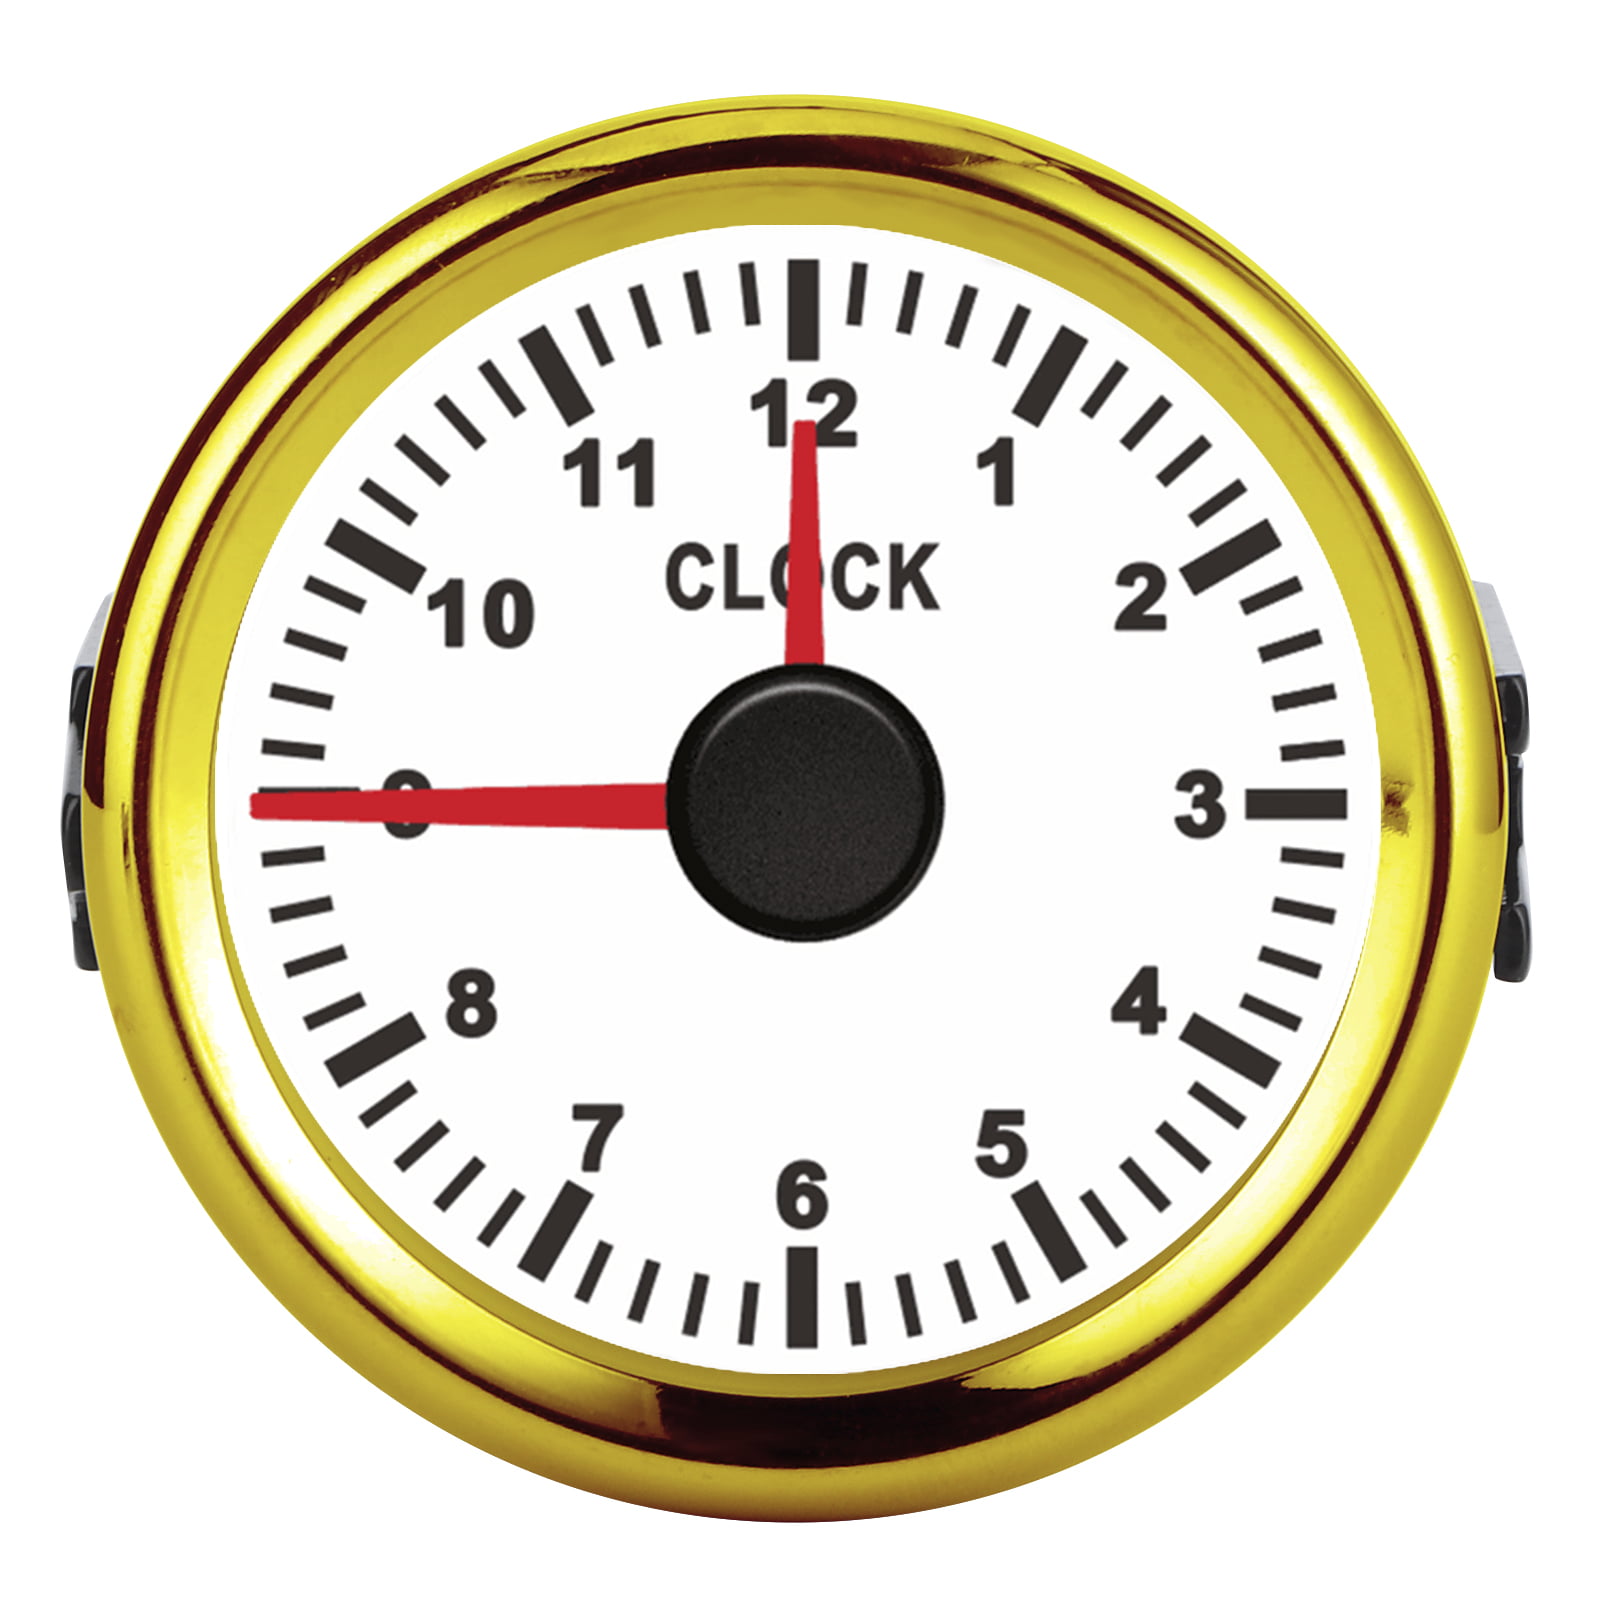 Clock Gauge 2in Universal 0‑12 Hourmeter Red Backlight Clock Instrument Panel Meter for Car Boat Yacht Motorcycle Black Gold Frame 